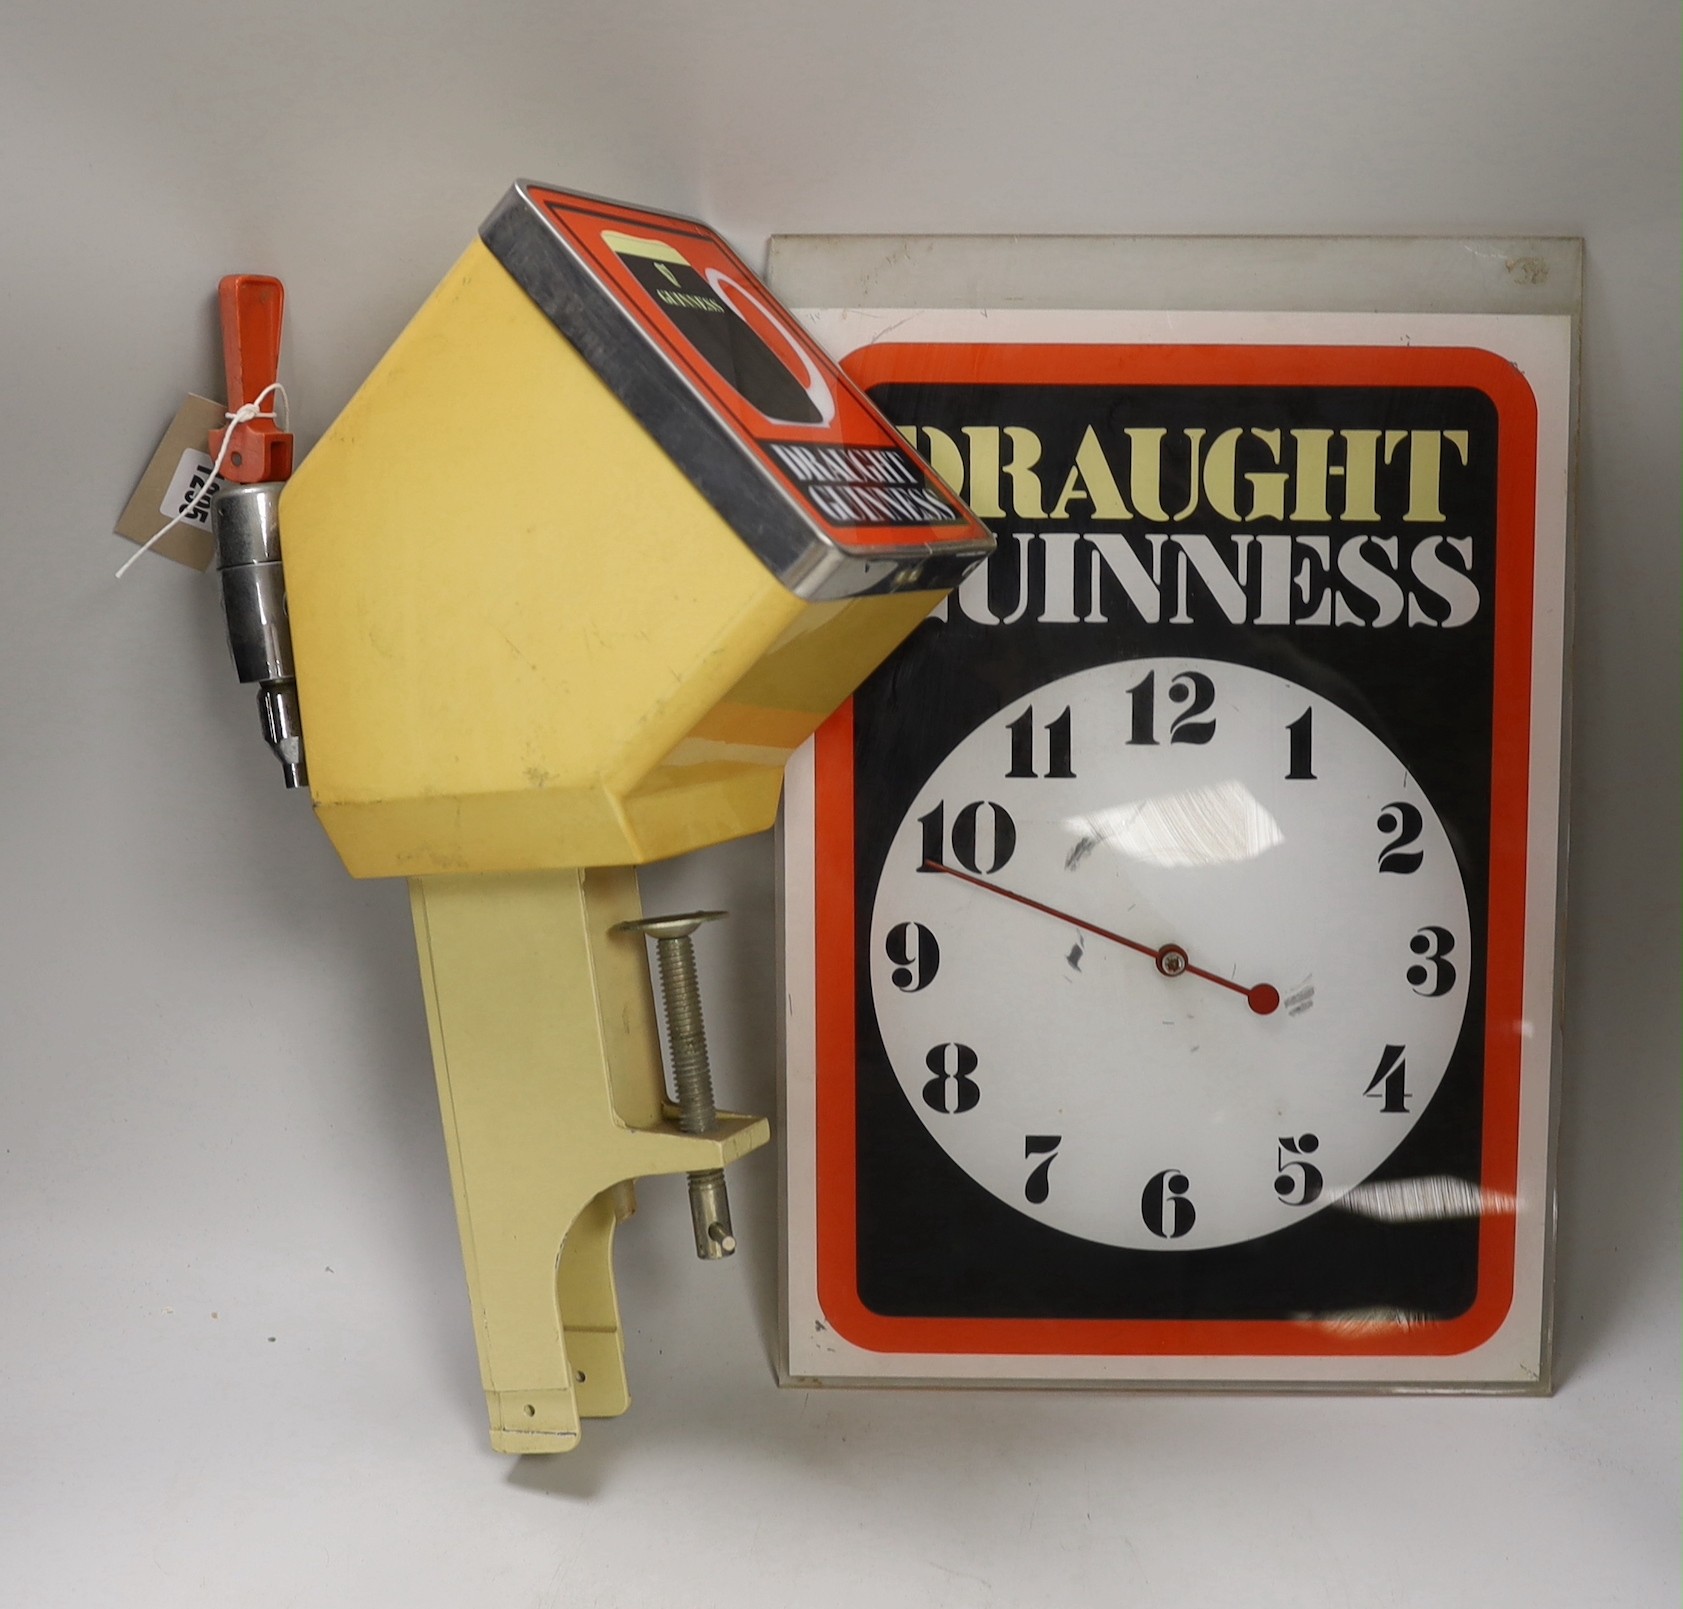 A rare Guinness bar dispenser and a Guinness wall clock